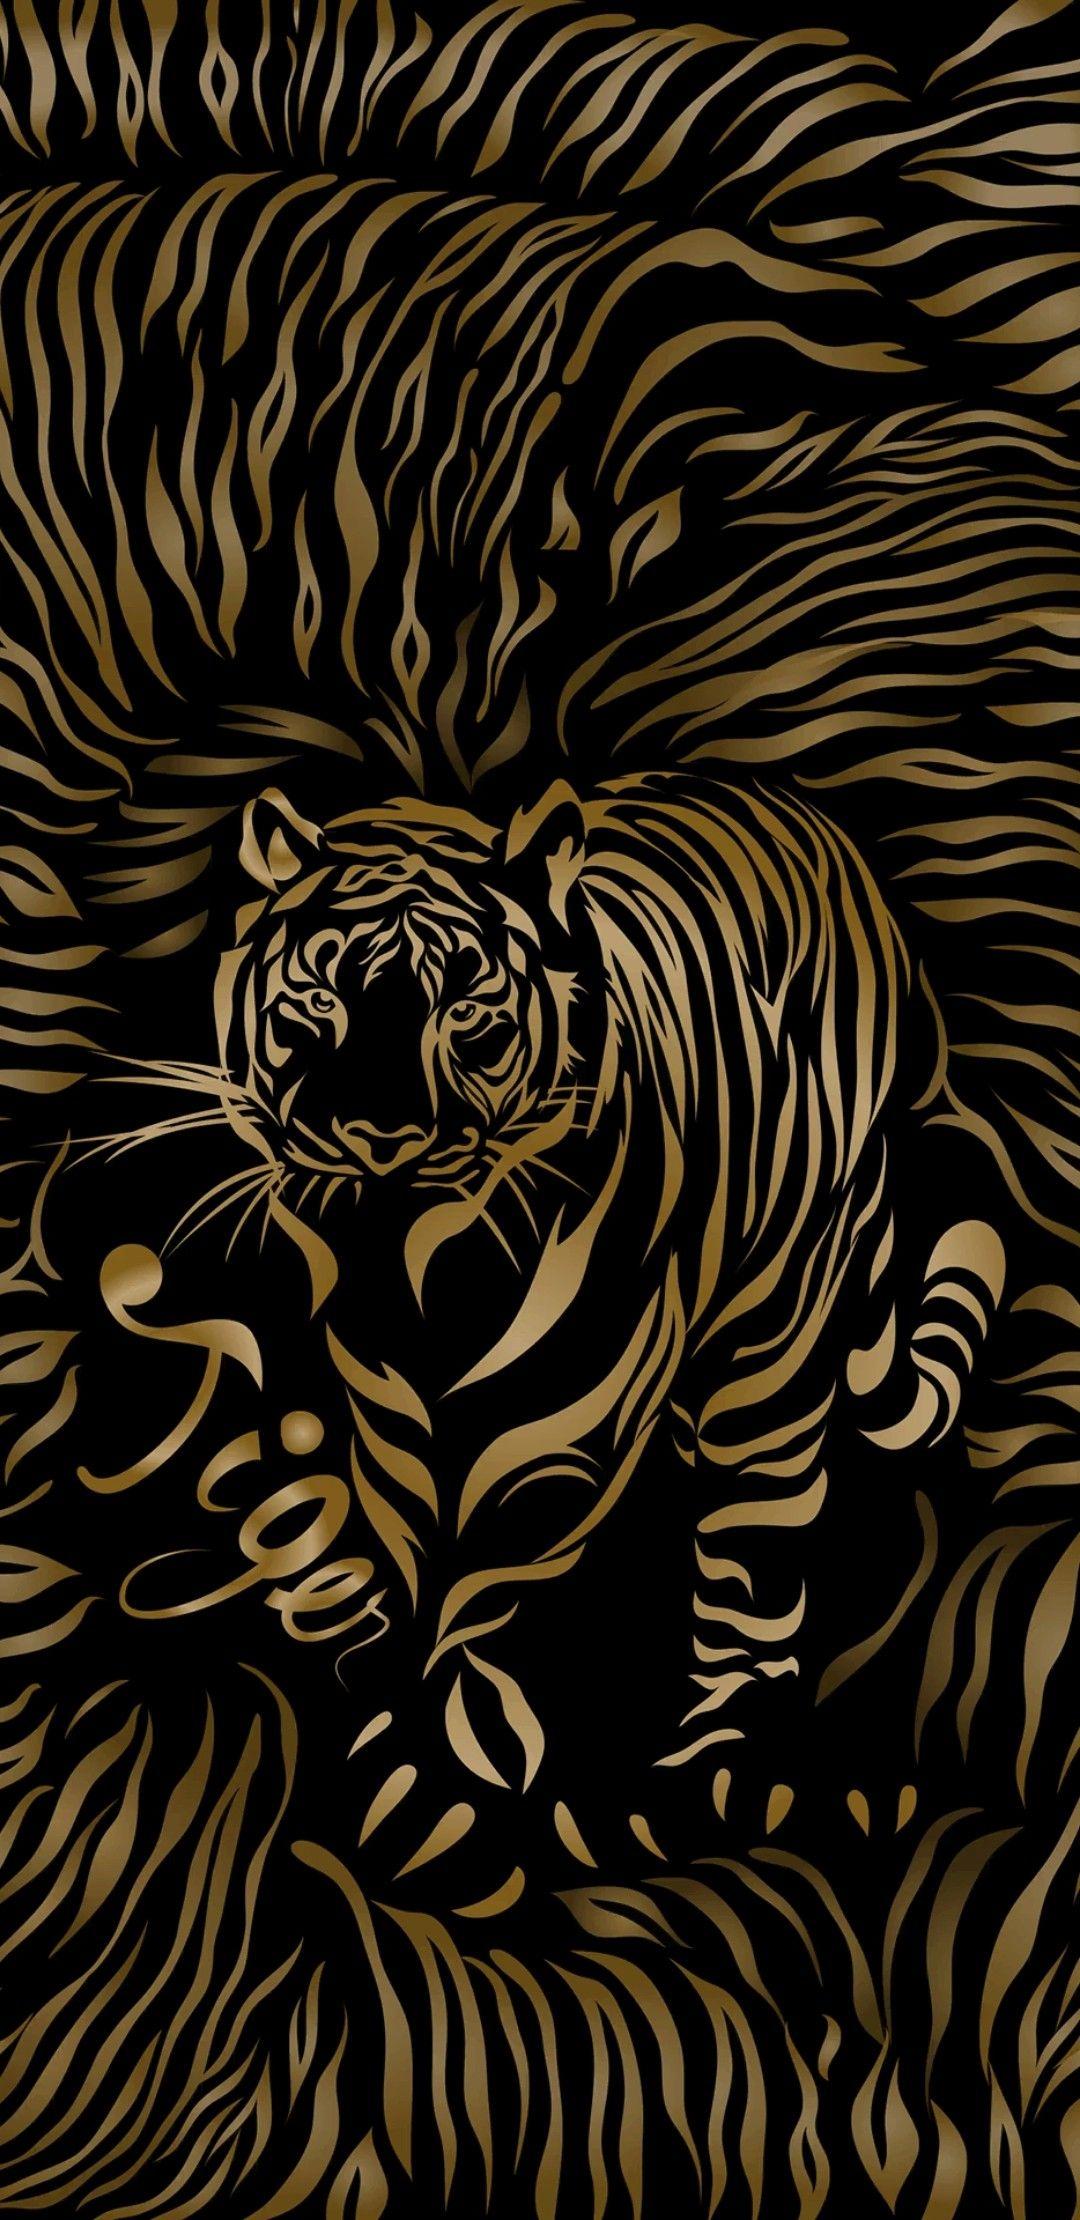 Phone Wallpaper. Tiger wallpaper